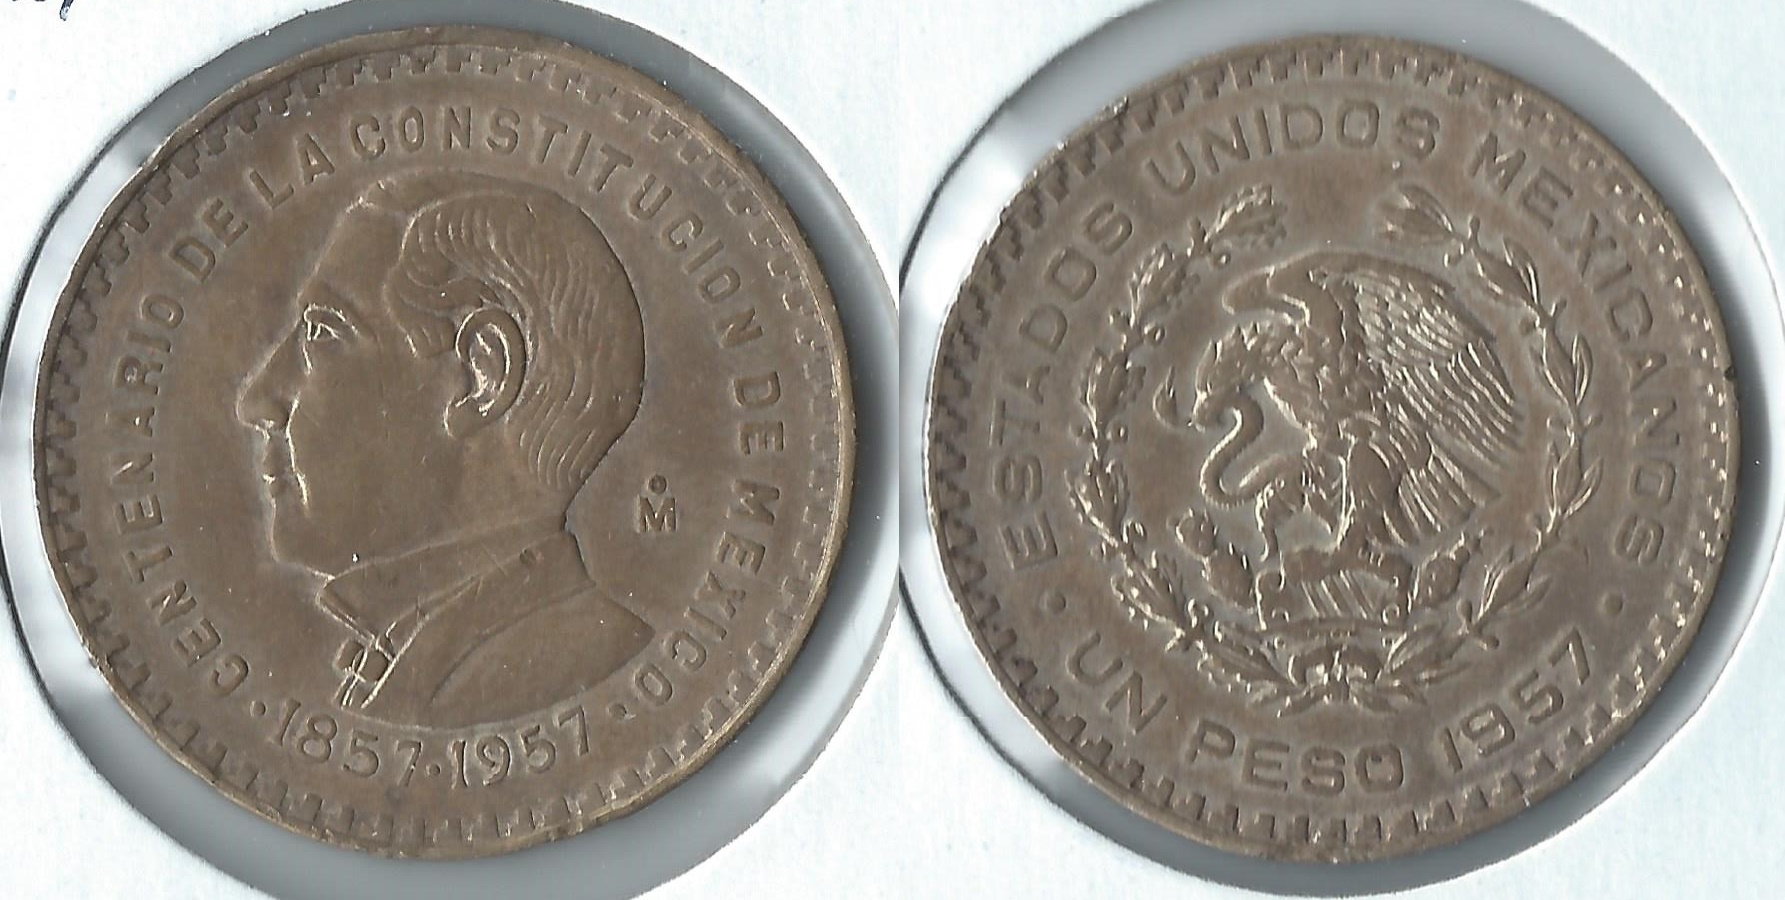 1957 mexico 1 peso constitution.jpg